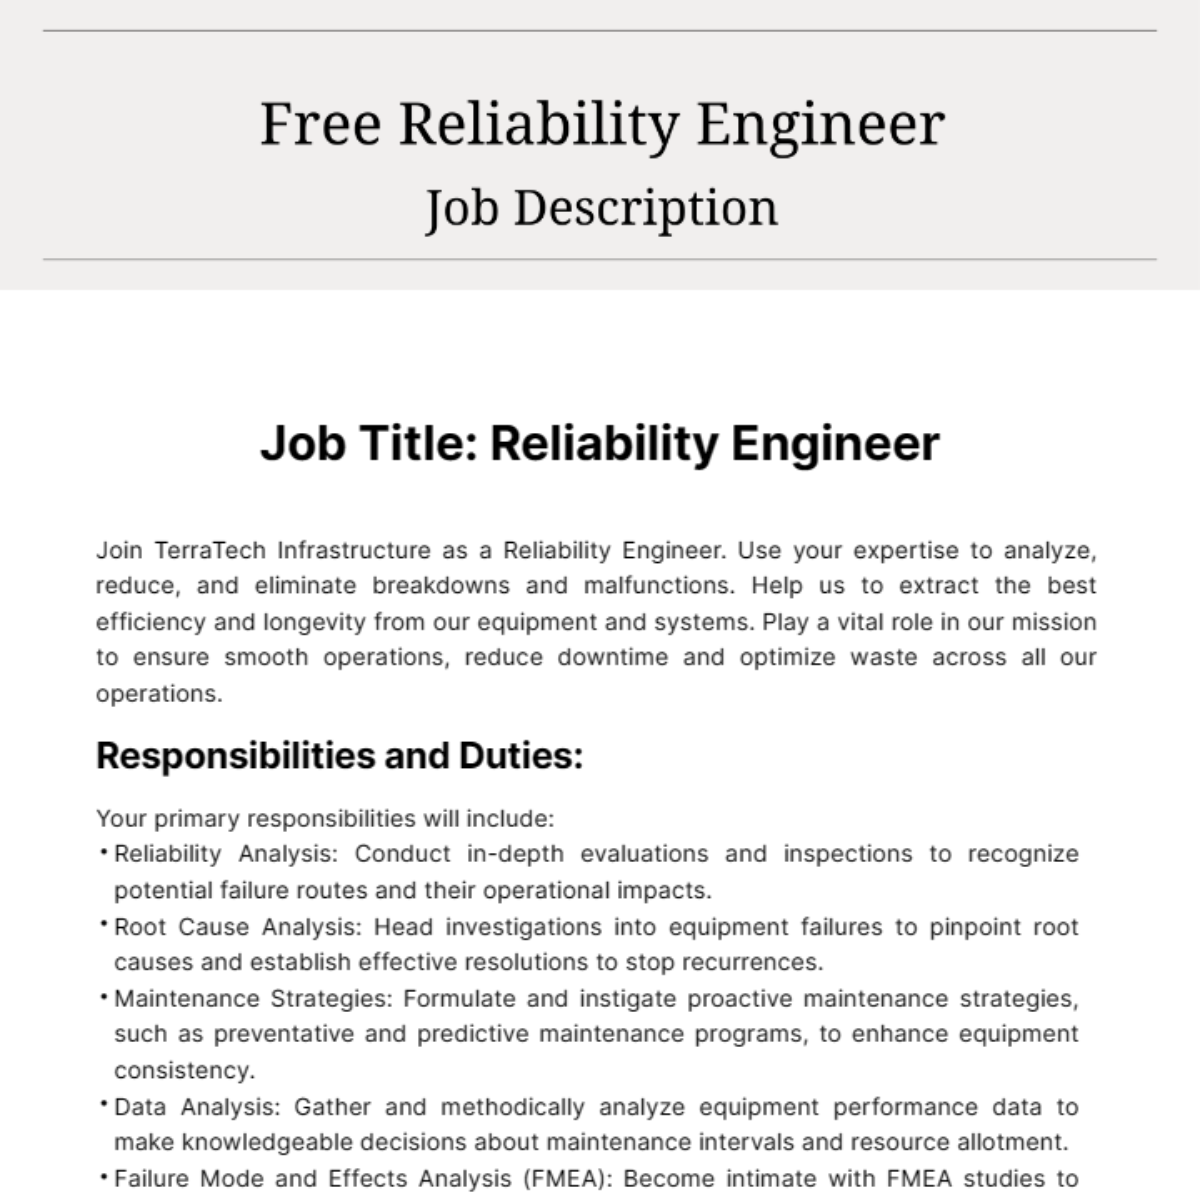 Free Reliability Engineer Job Description Template